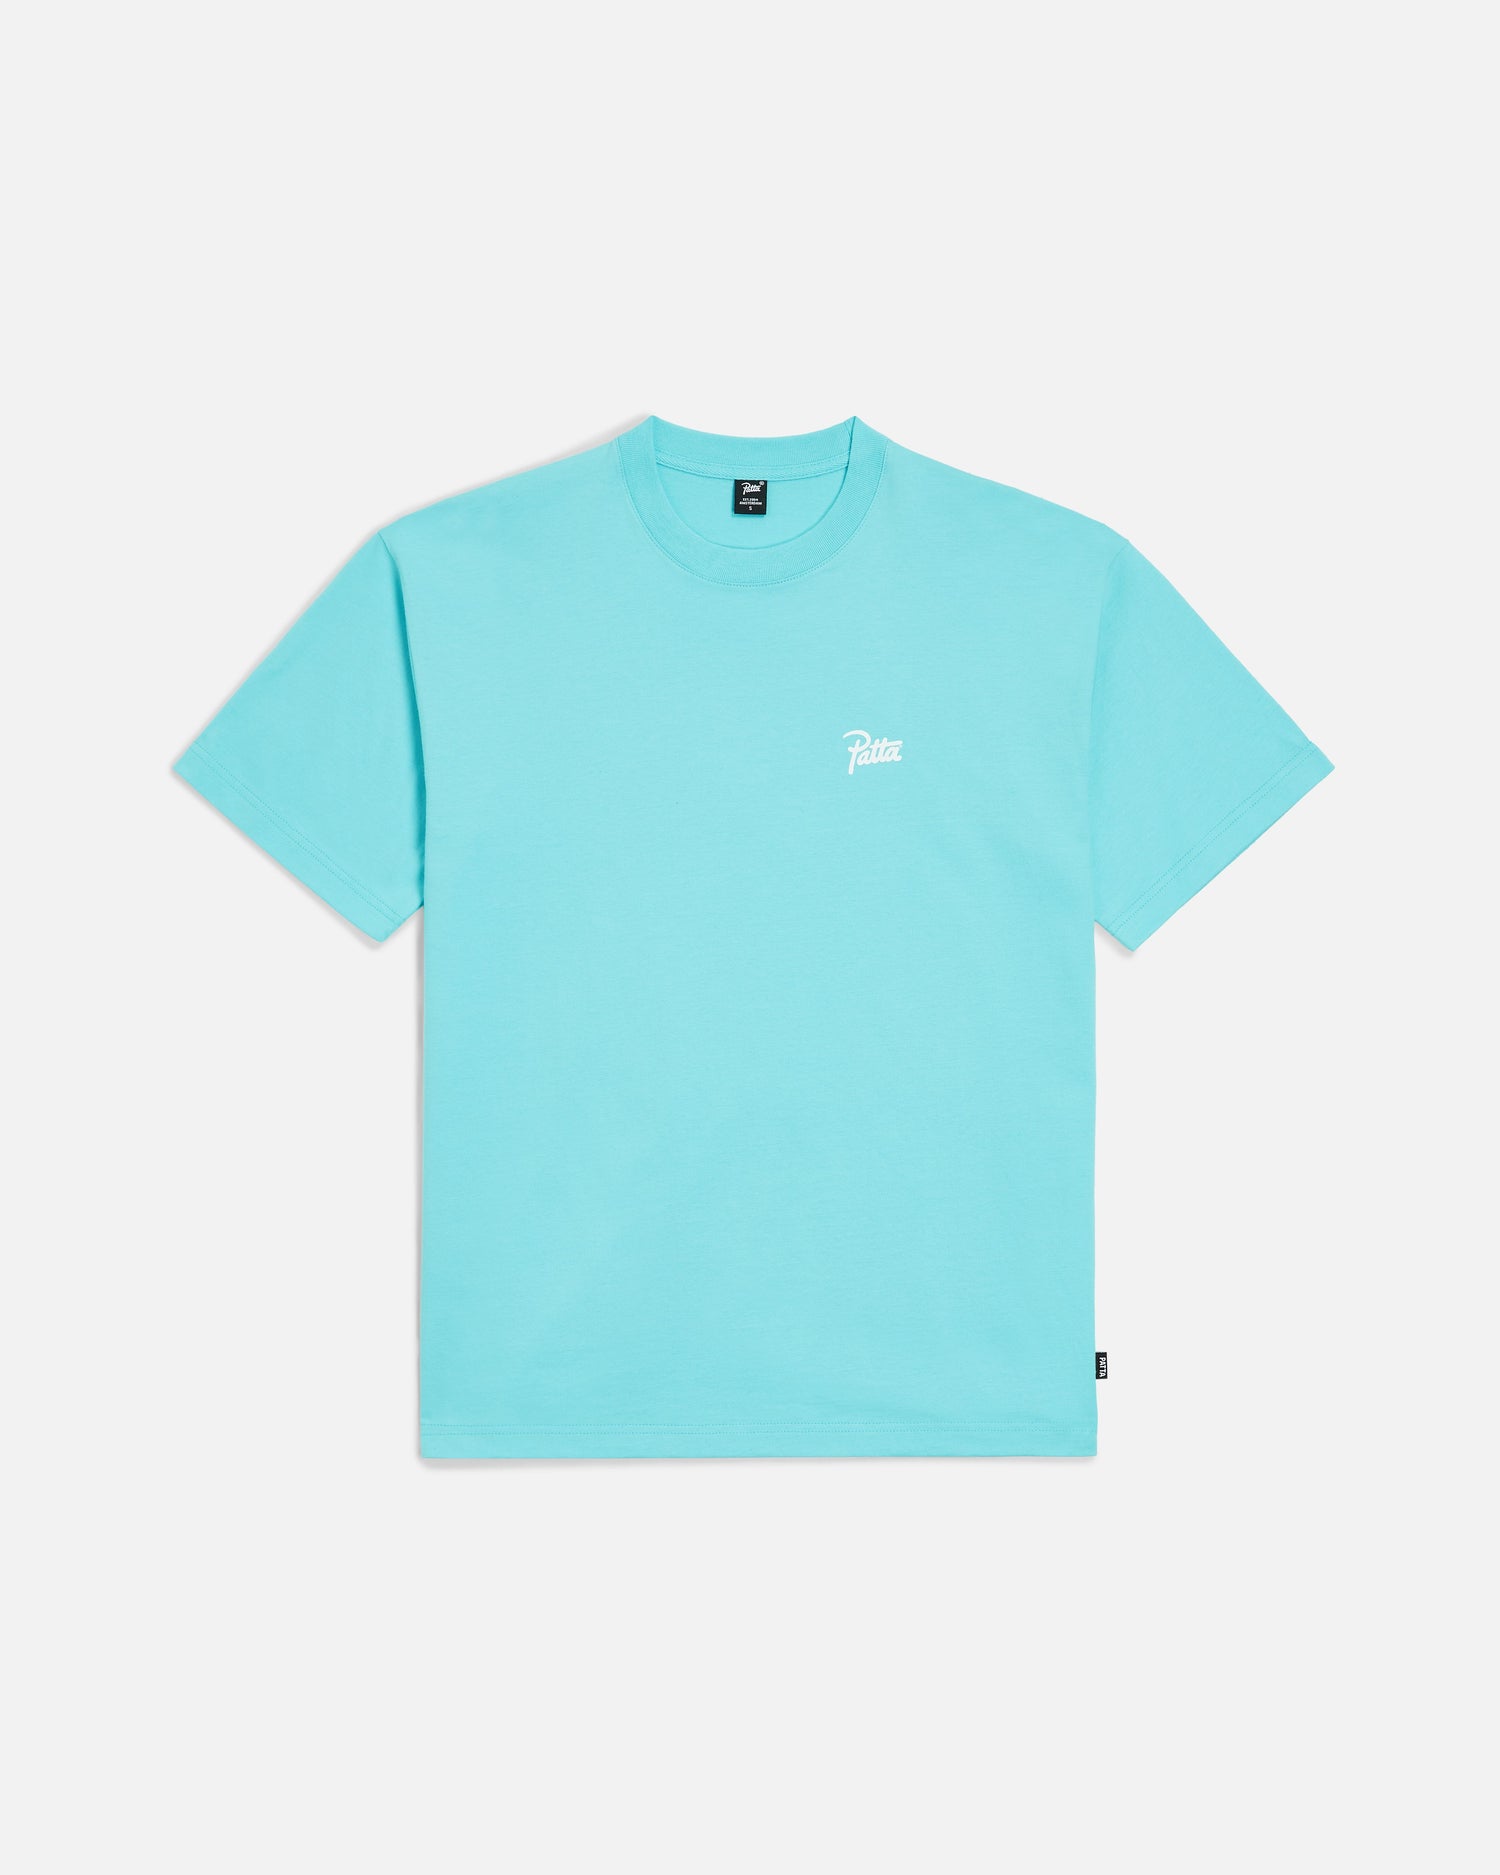 T-shirt Patta A qualcuno piace caldo (Splendore blu)